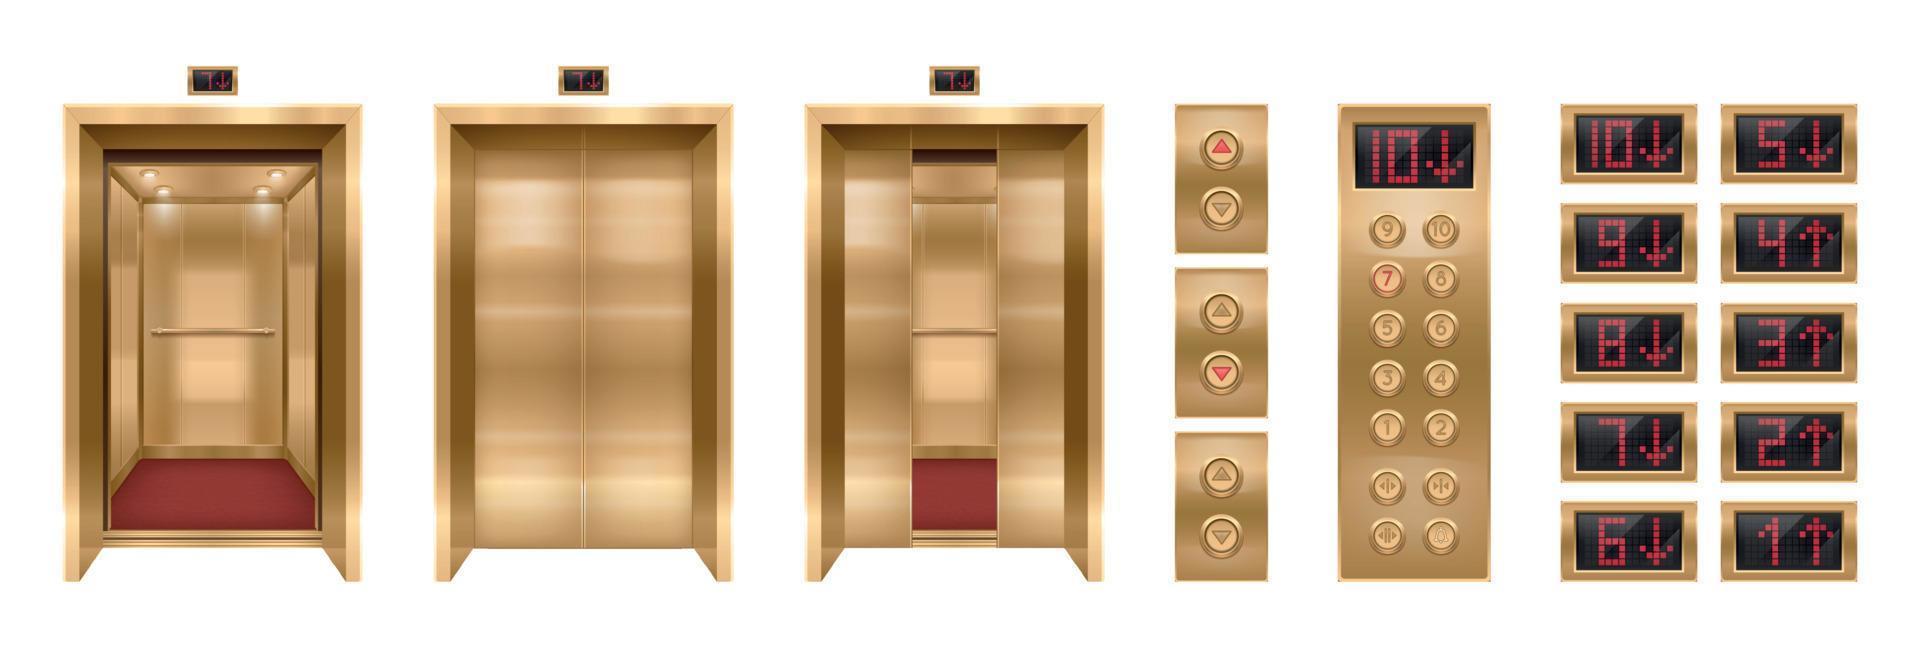 Luxury Elevator Elements Collection vector